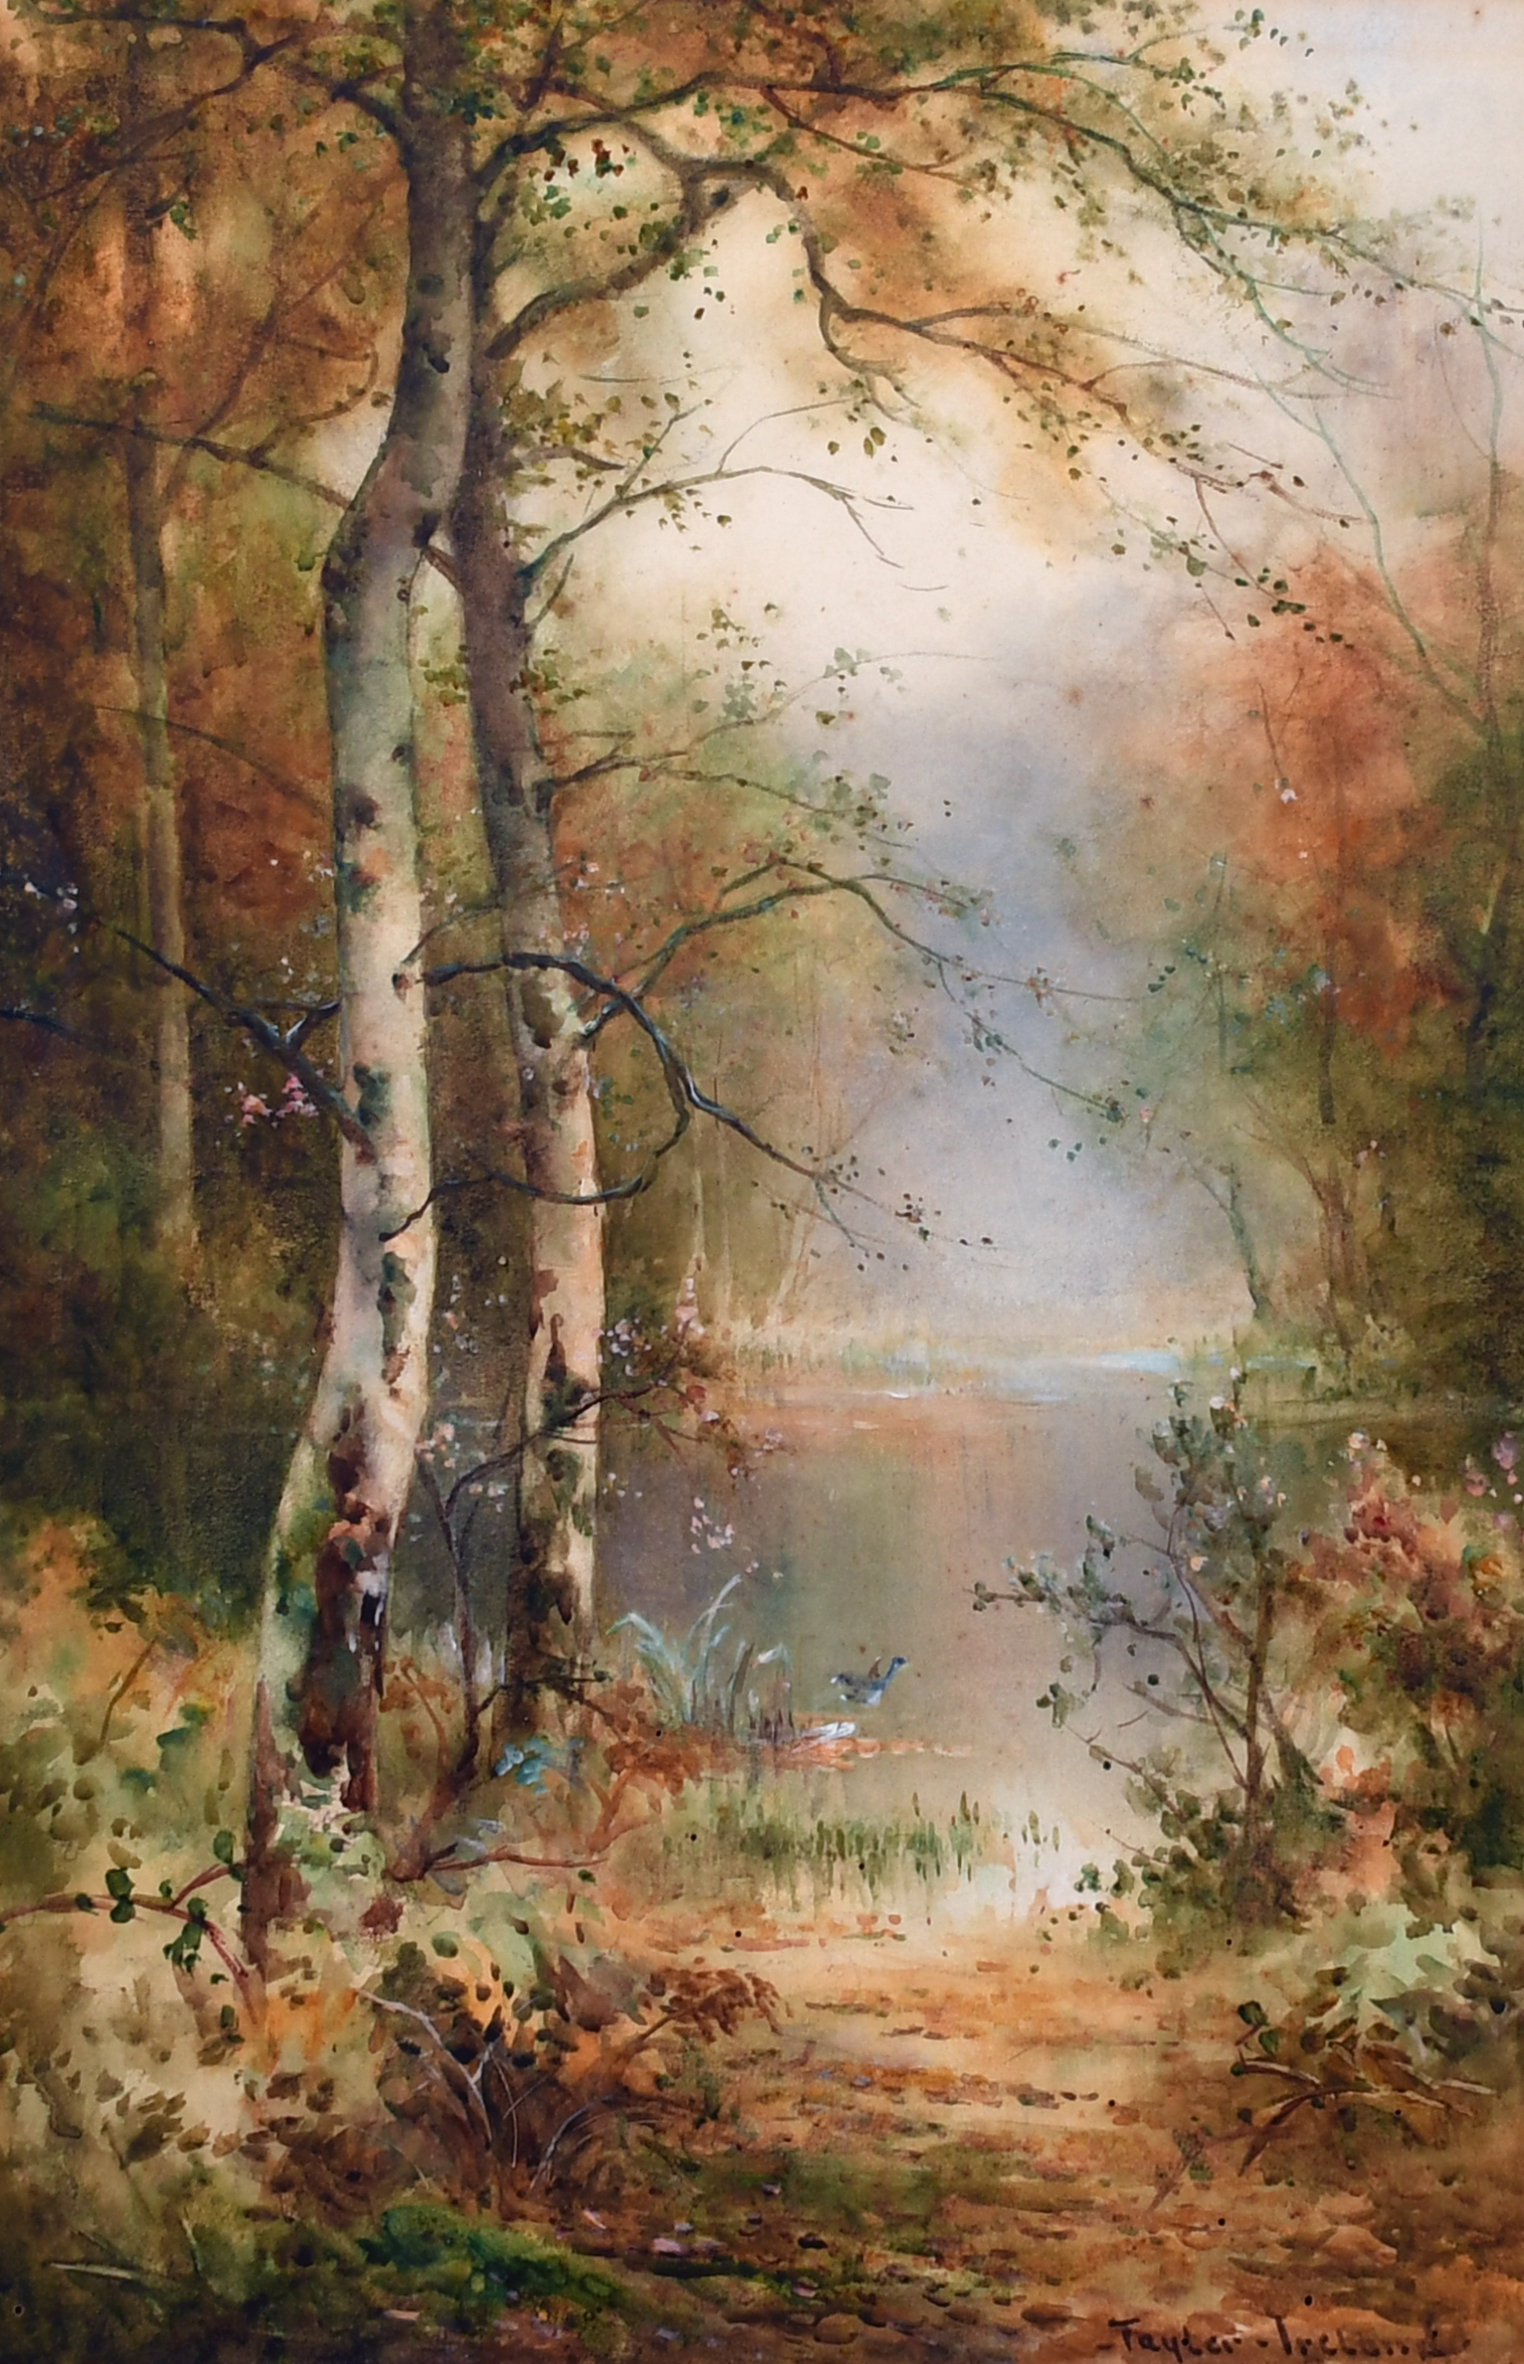 Thomas Taylor Ireland (act.1880-1927) British. “Golden Autumn”, a Tranquil River Landscape,